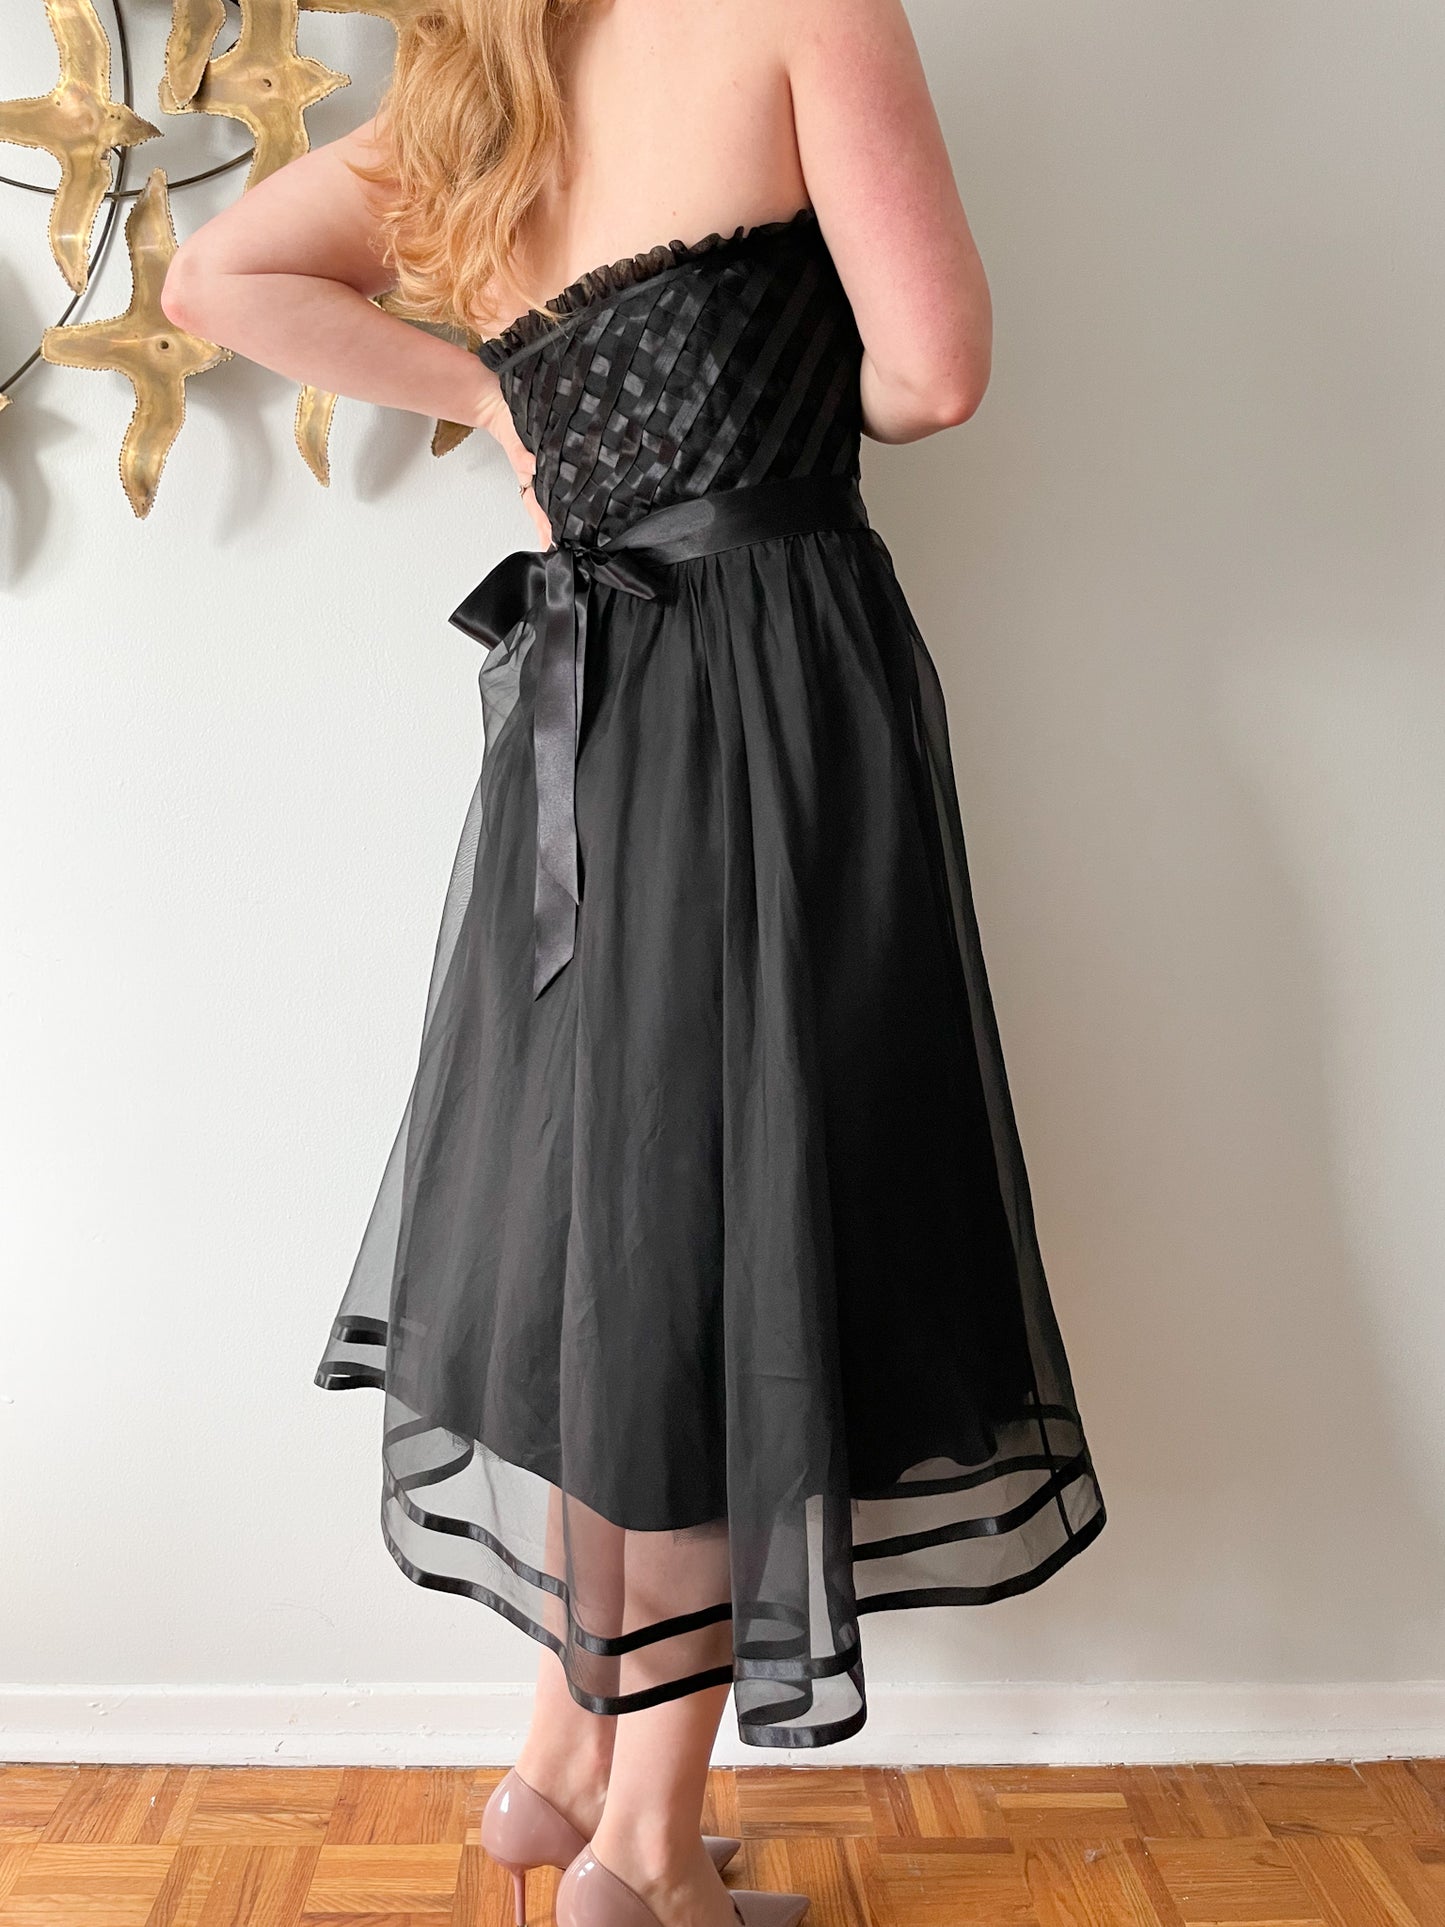 Laundry by Shelli Segal Black Silk Ruffle Ribbon Bodice Strapless Tea Length Dress - XS